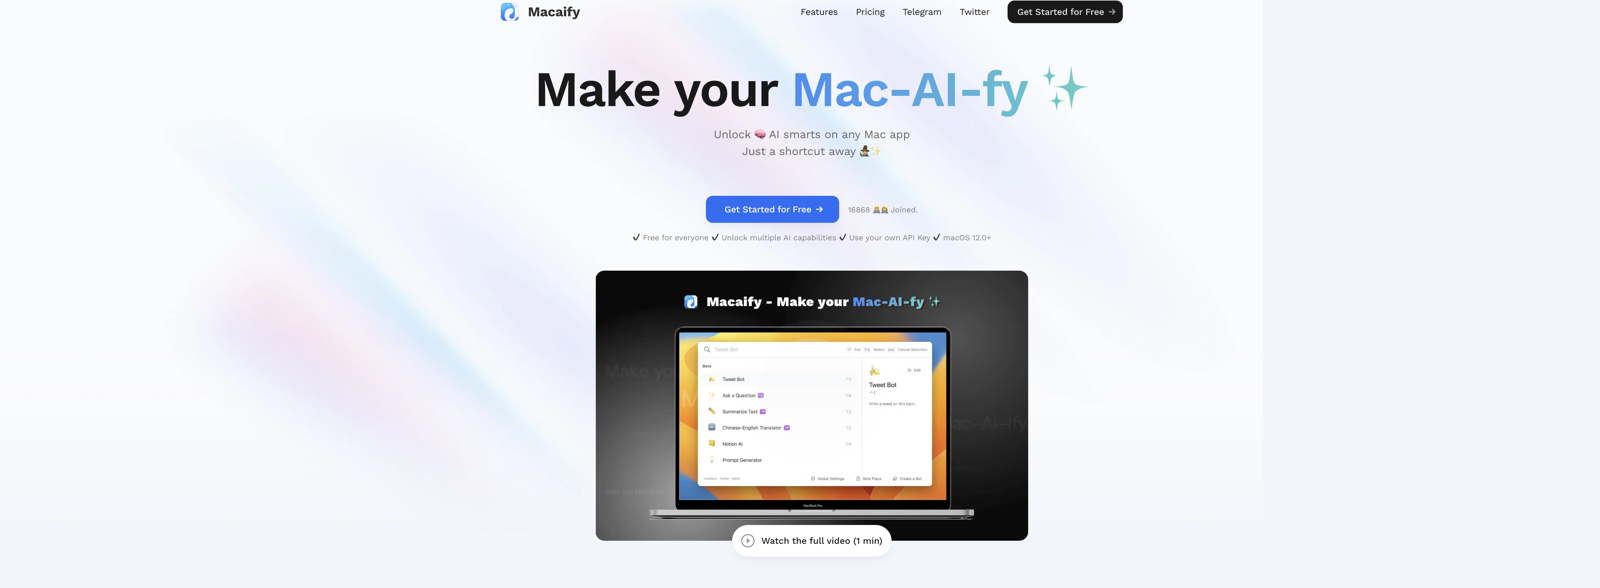 Macaify website